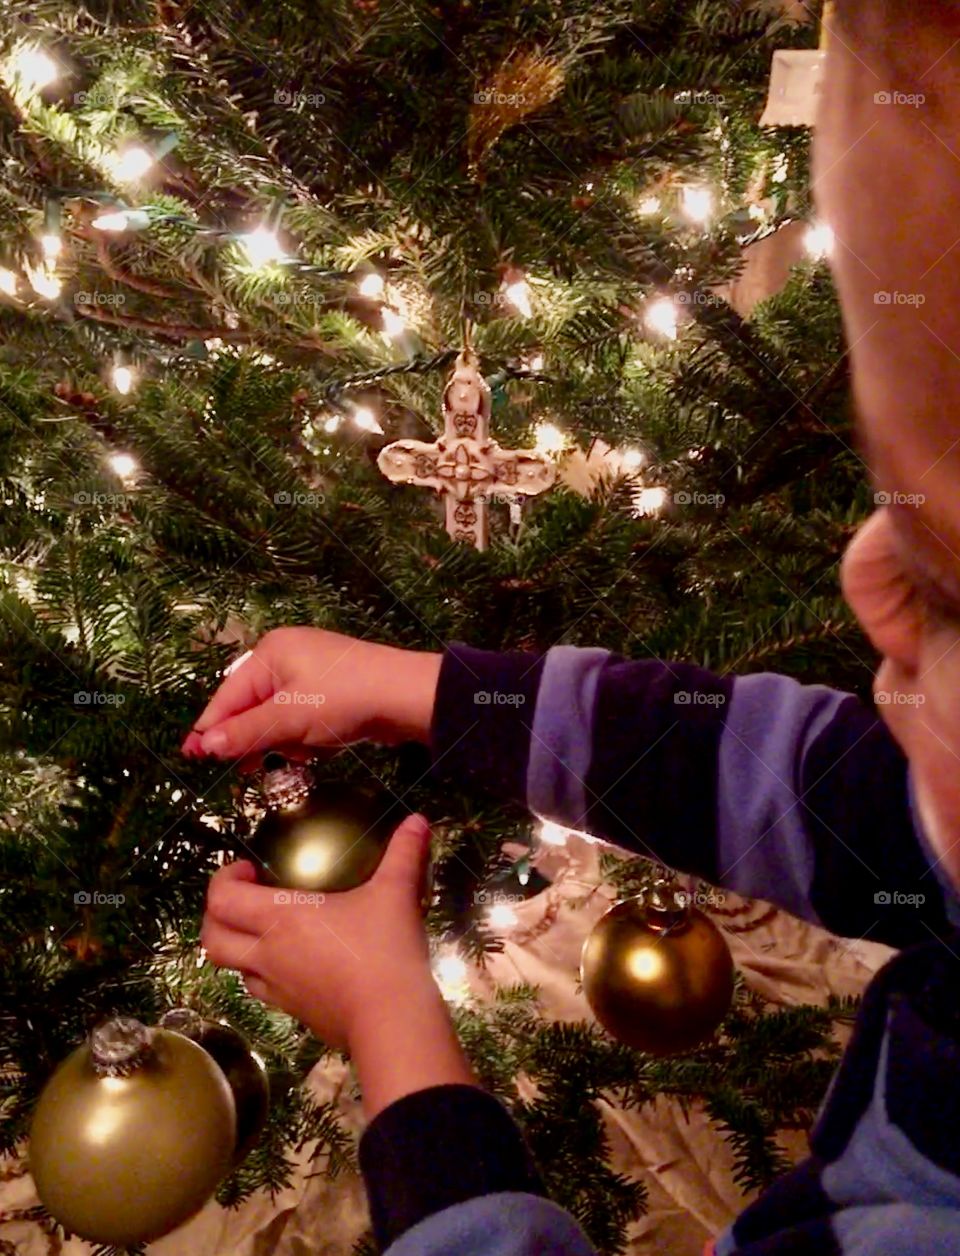 Decorating the Christmas tree 